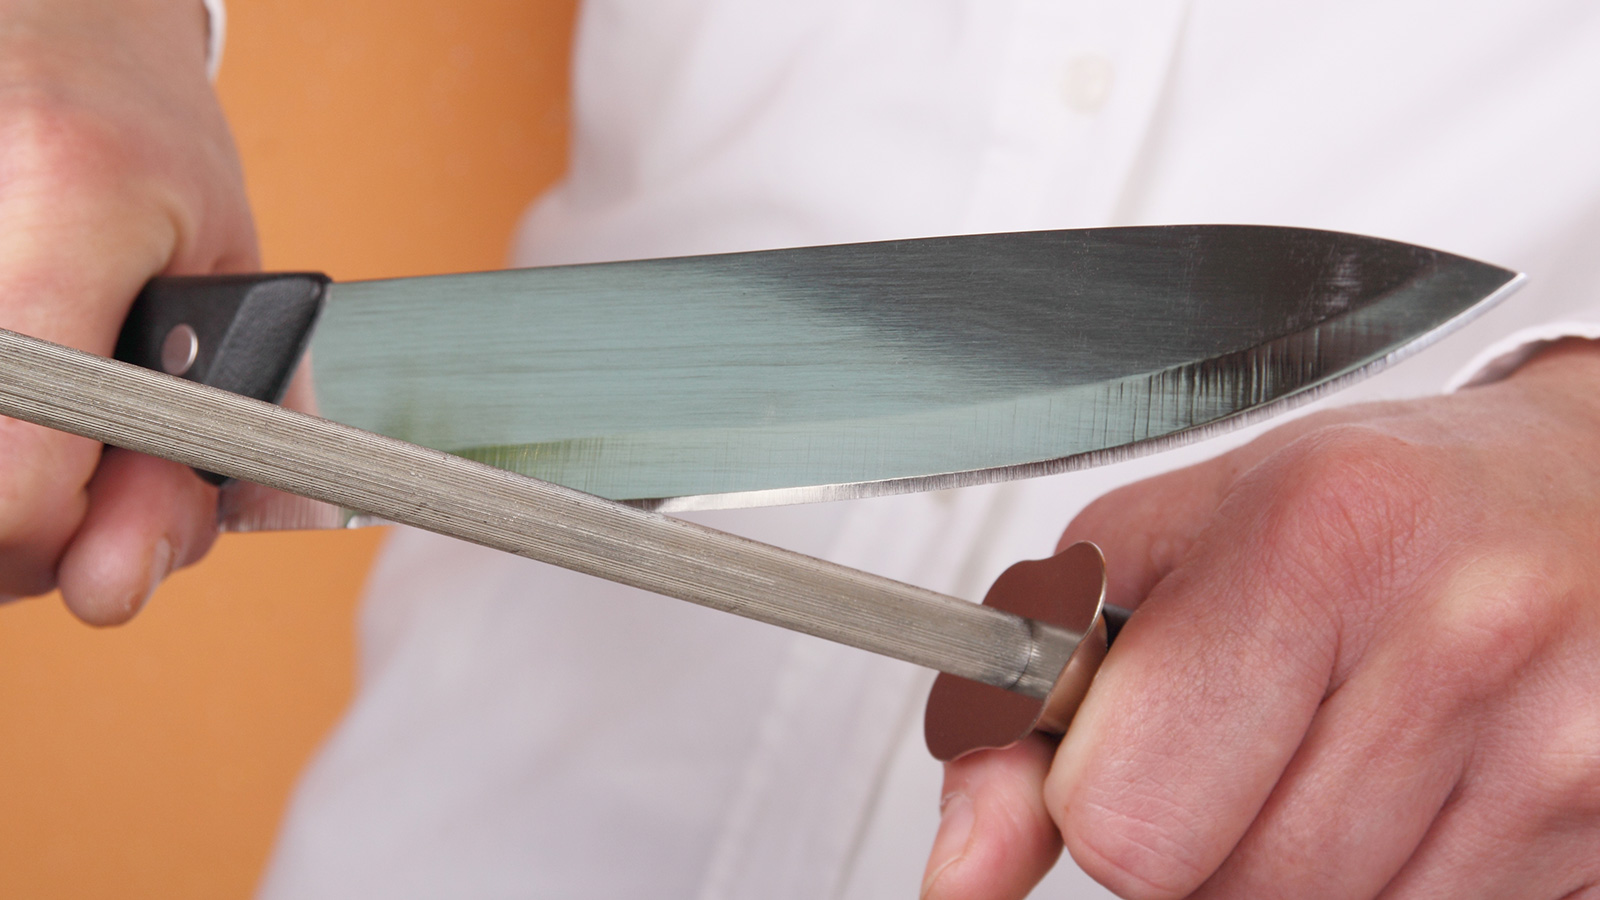 Как наточить нож в домашних условиях видео